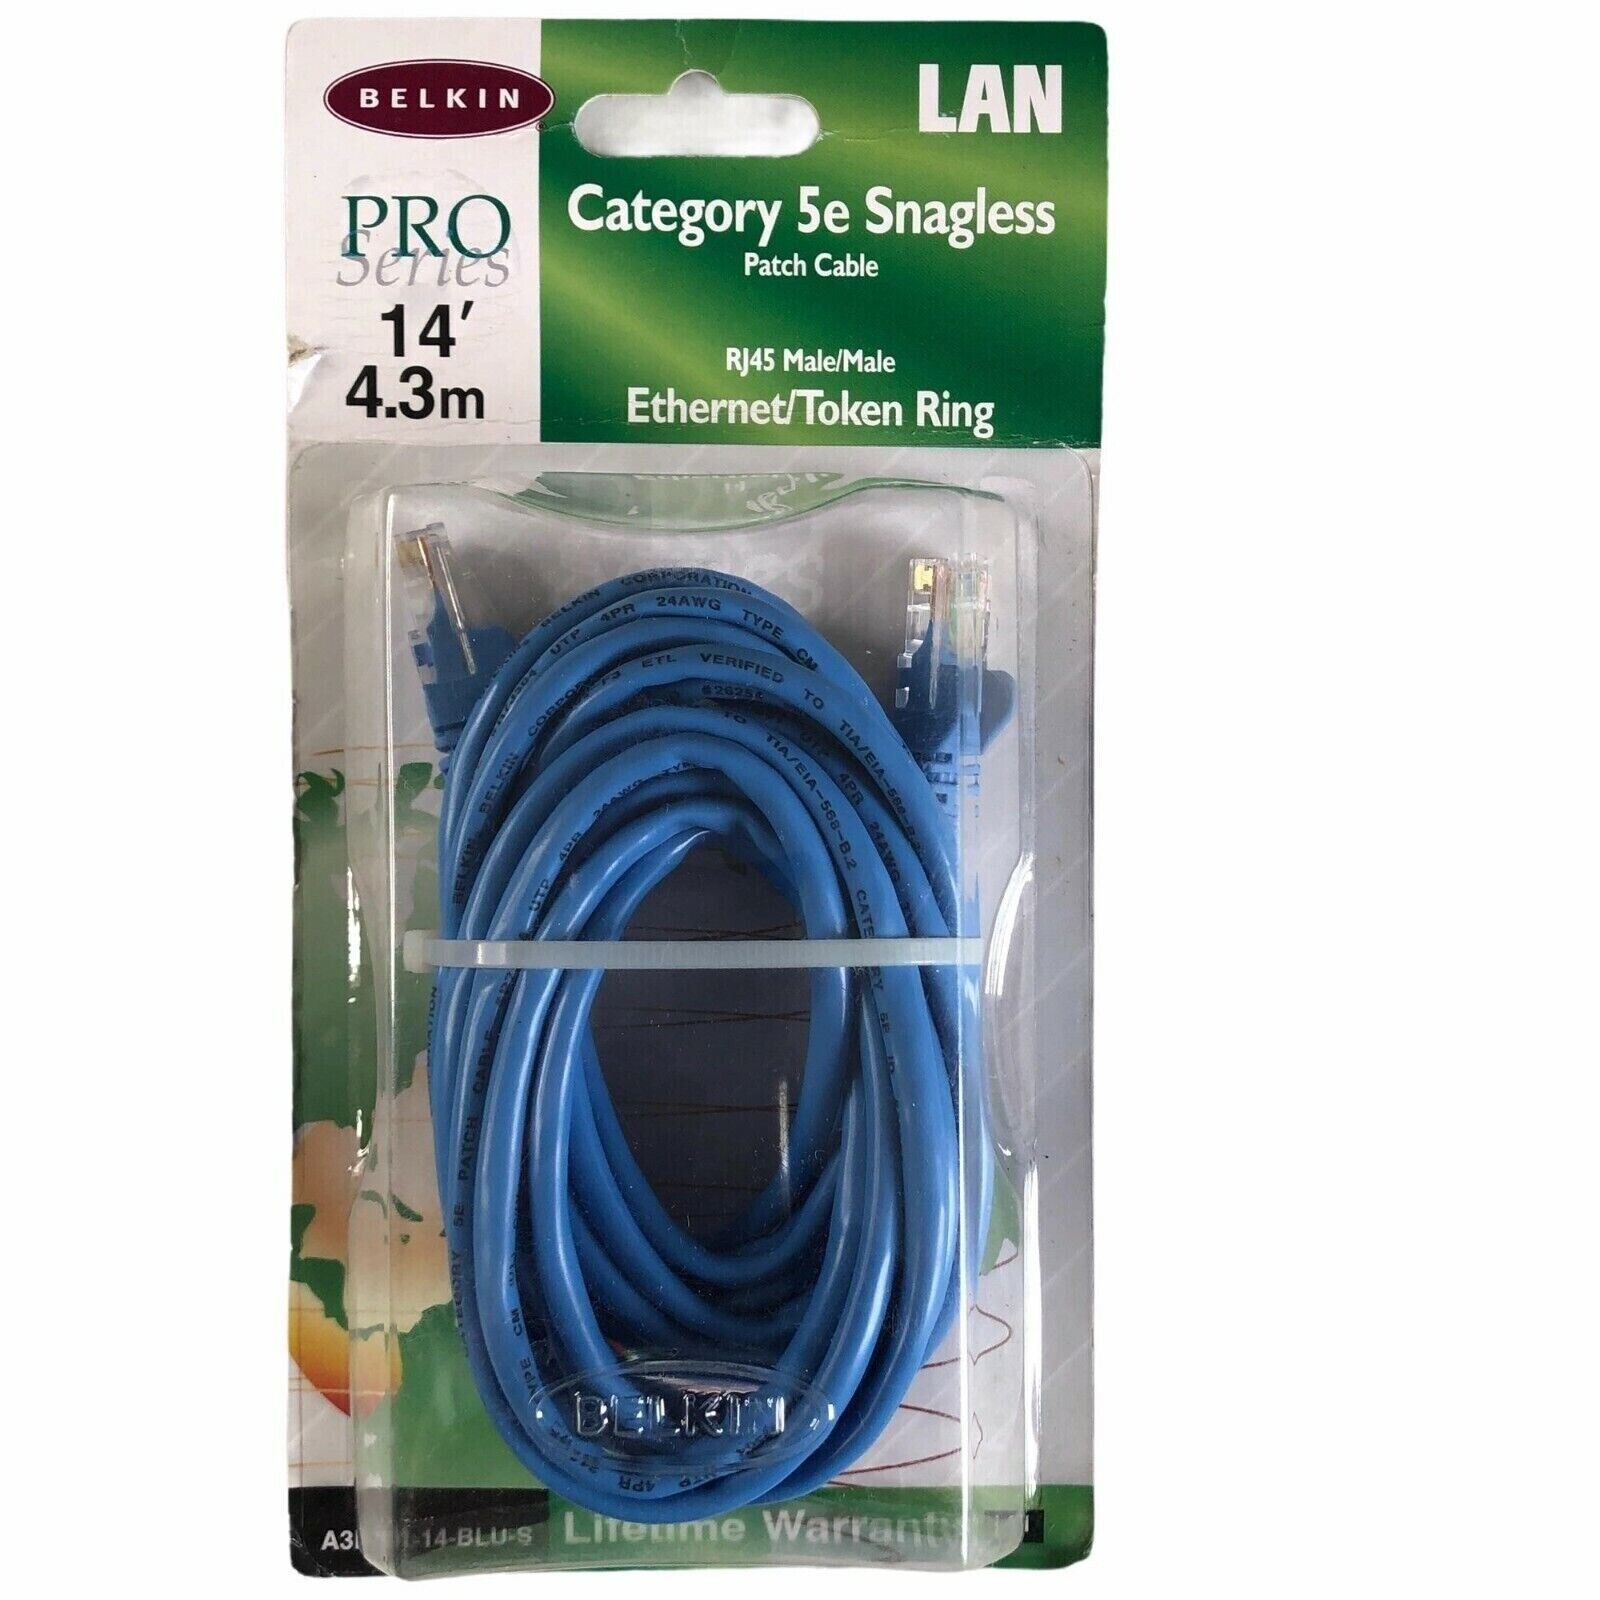 Belkin Pro Series Patch Cable 14' 4.3m A3L791-14-BLU-S LAN Category 5e Snagless